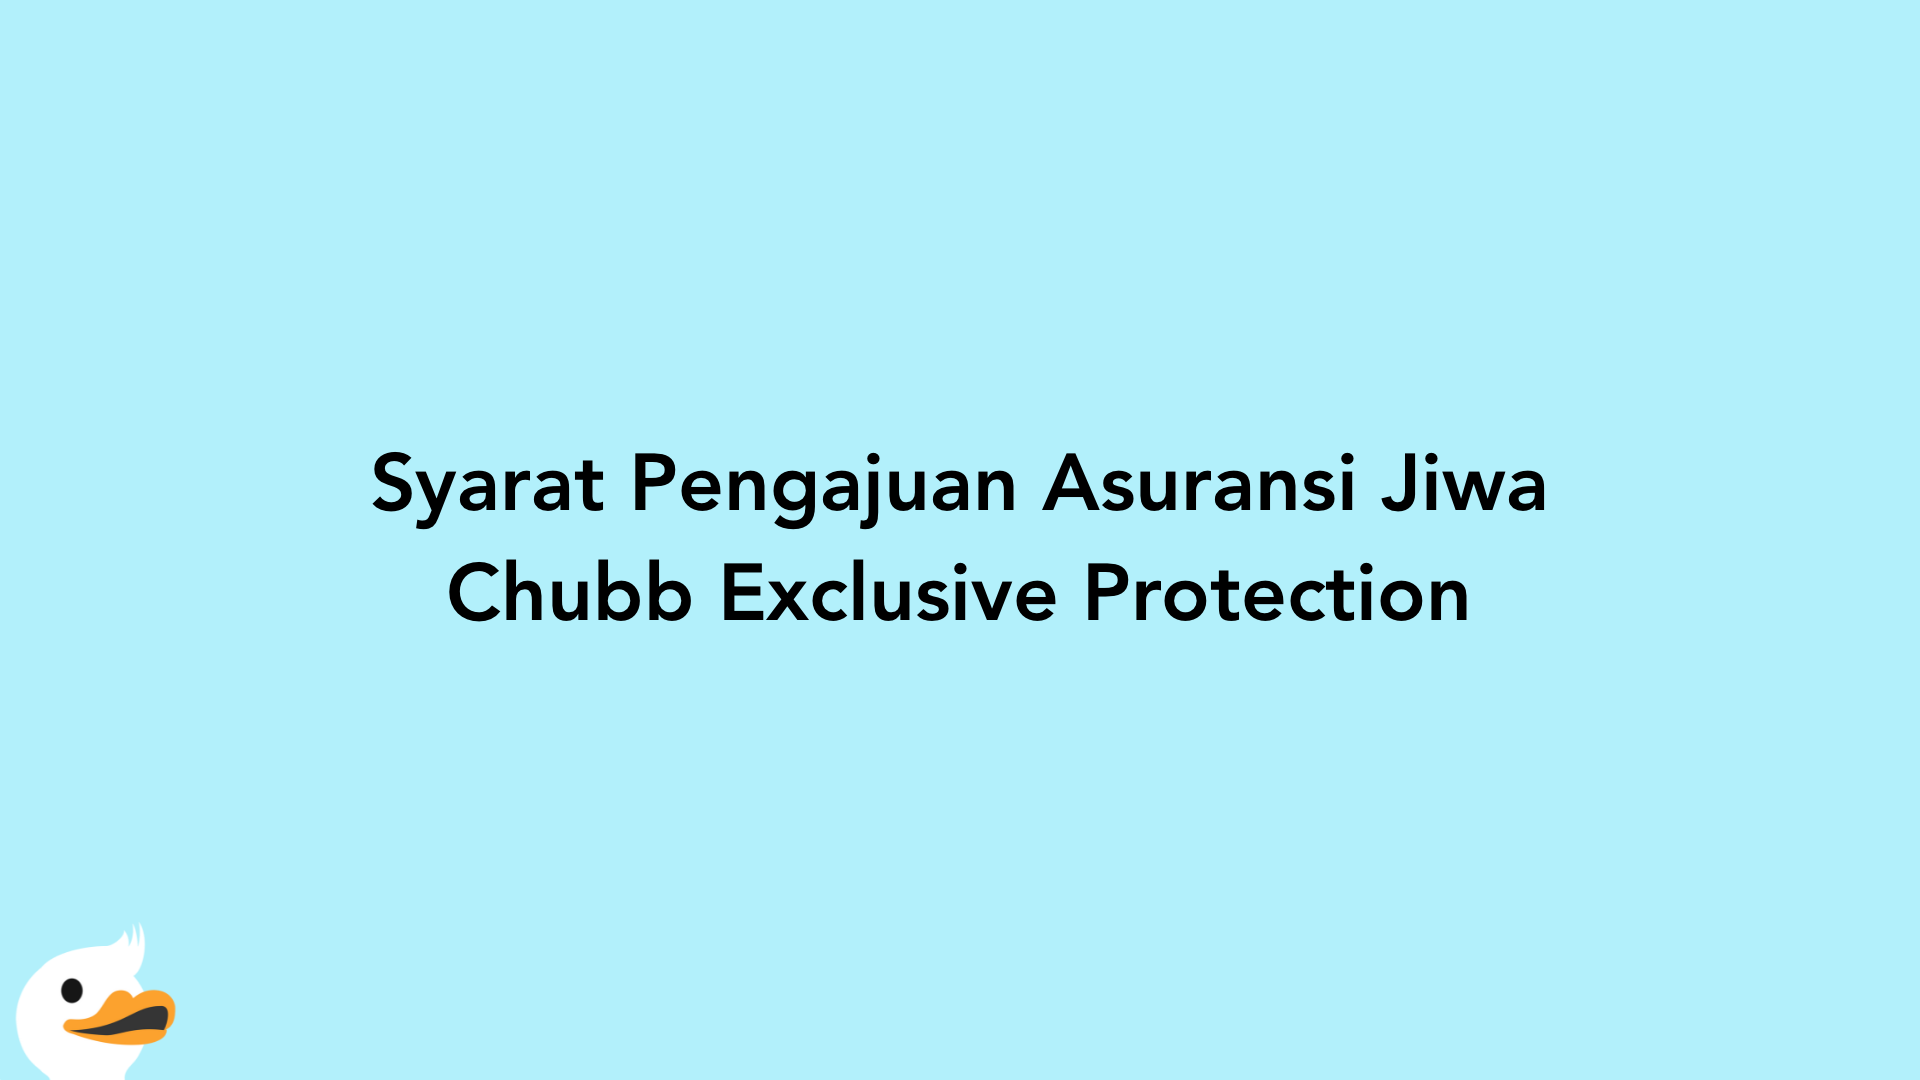 Syarat Pengajuan Asuransi Jiwa Chubb Exclusive Protection